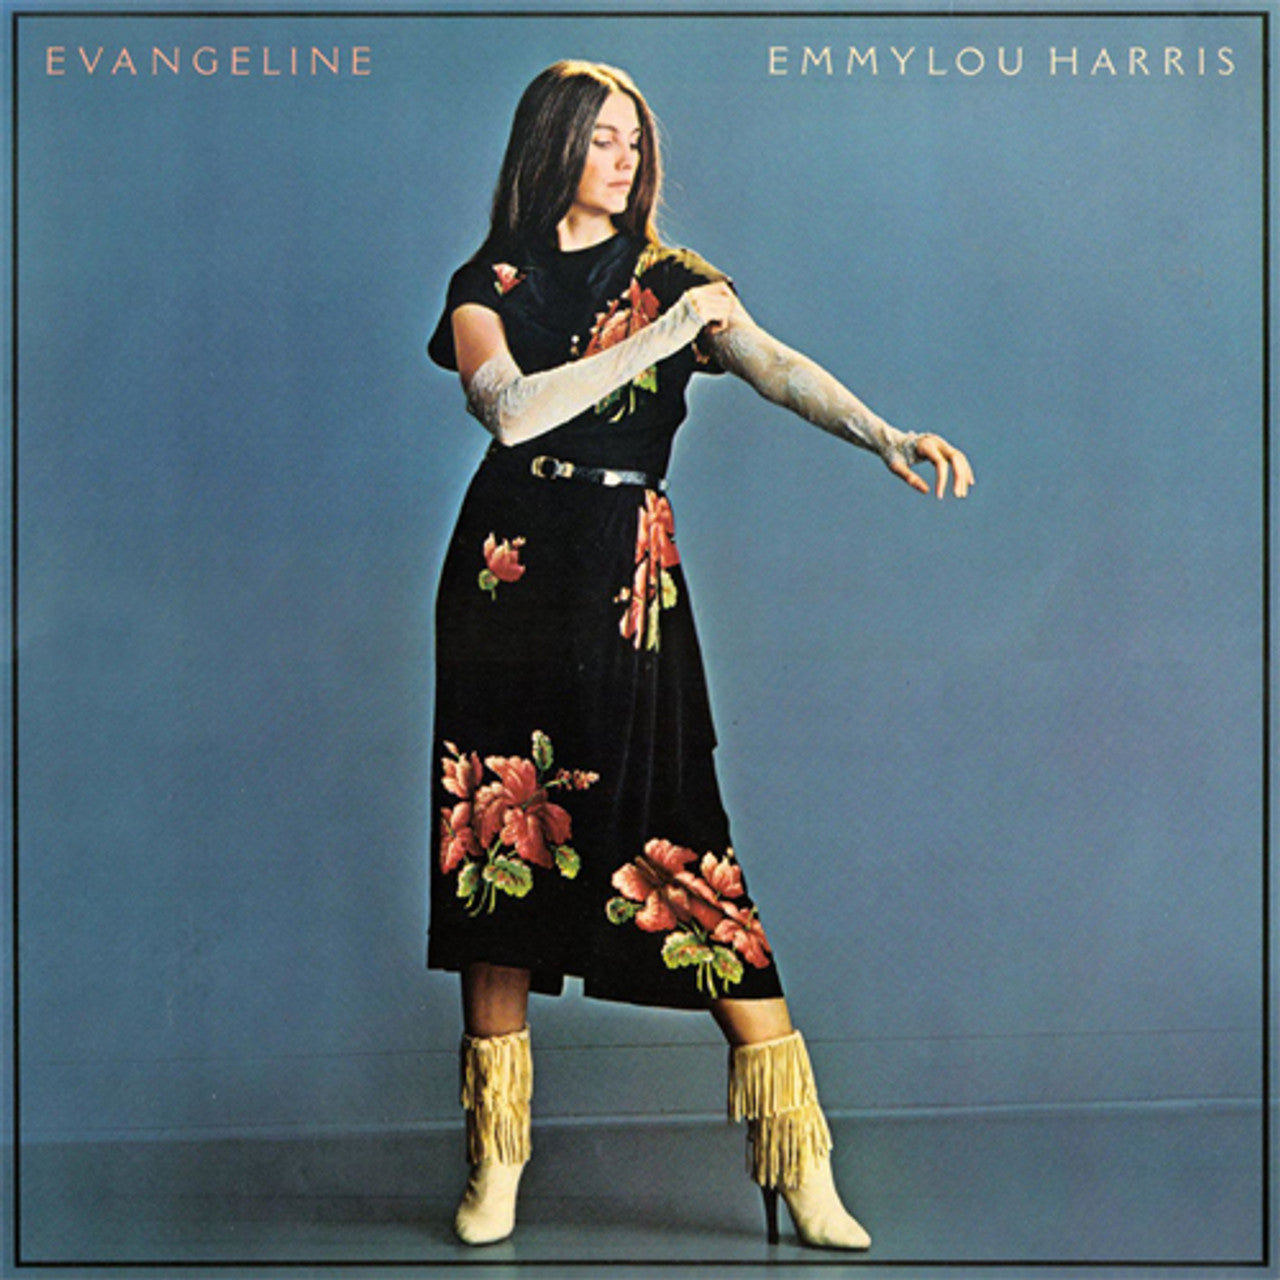 Emmylou Harris - EVANGELINE LP